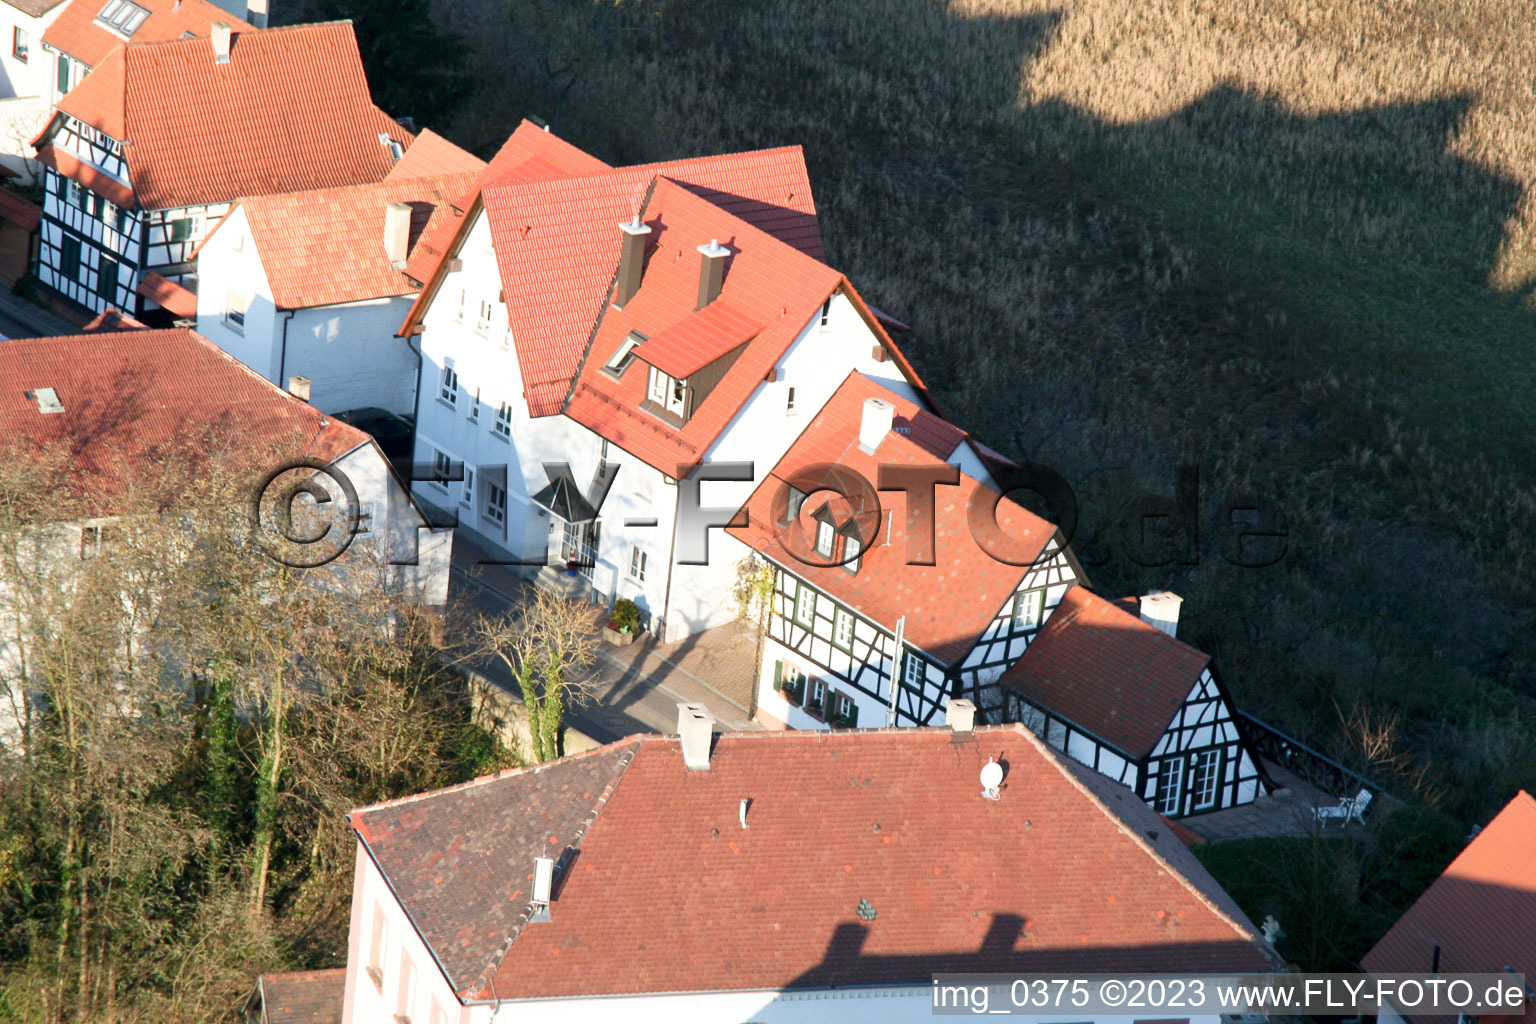 Bird's eye view of Ludwigstr in Jockgrim in the state Rhineland-Palatinate, Germany